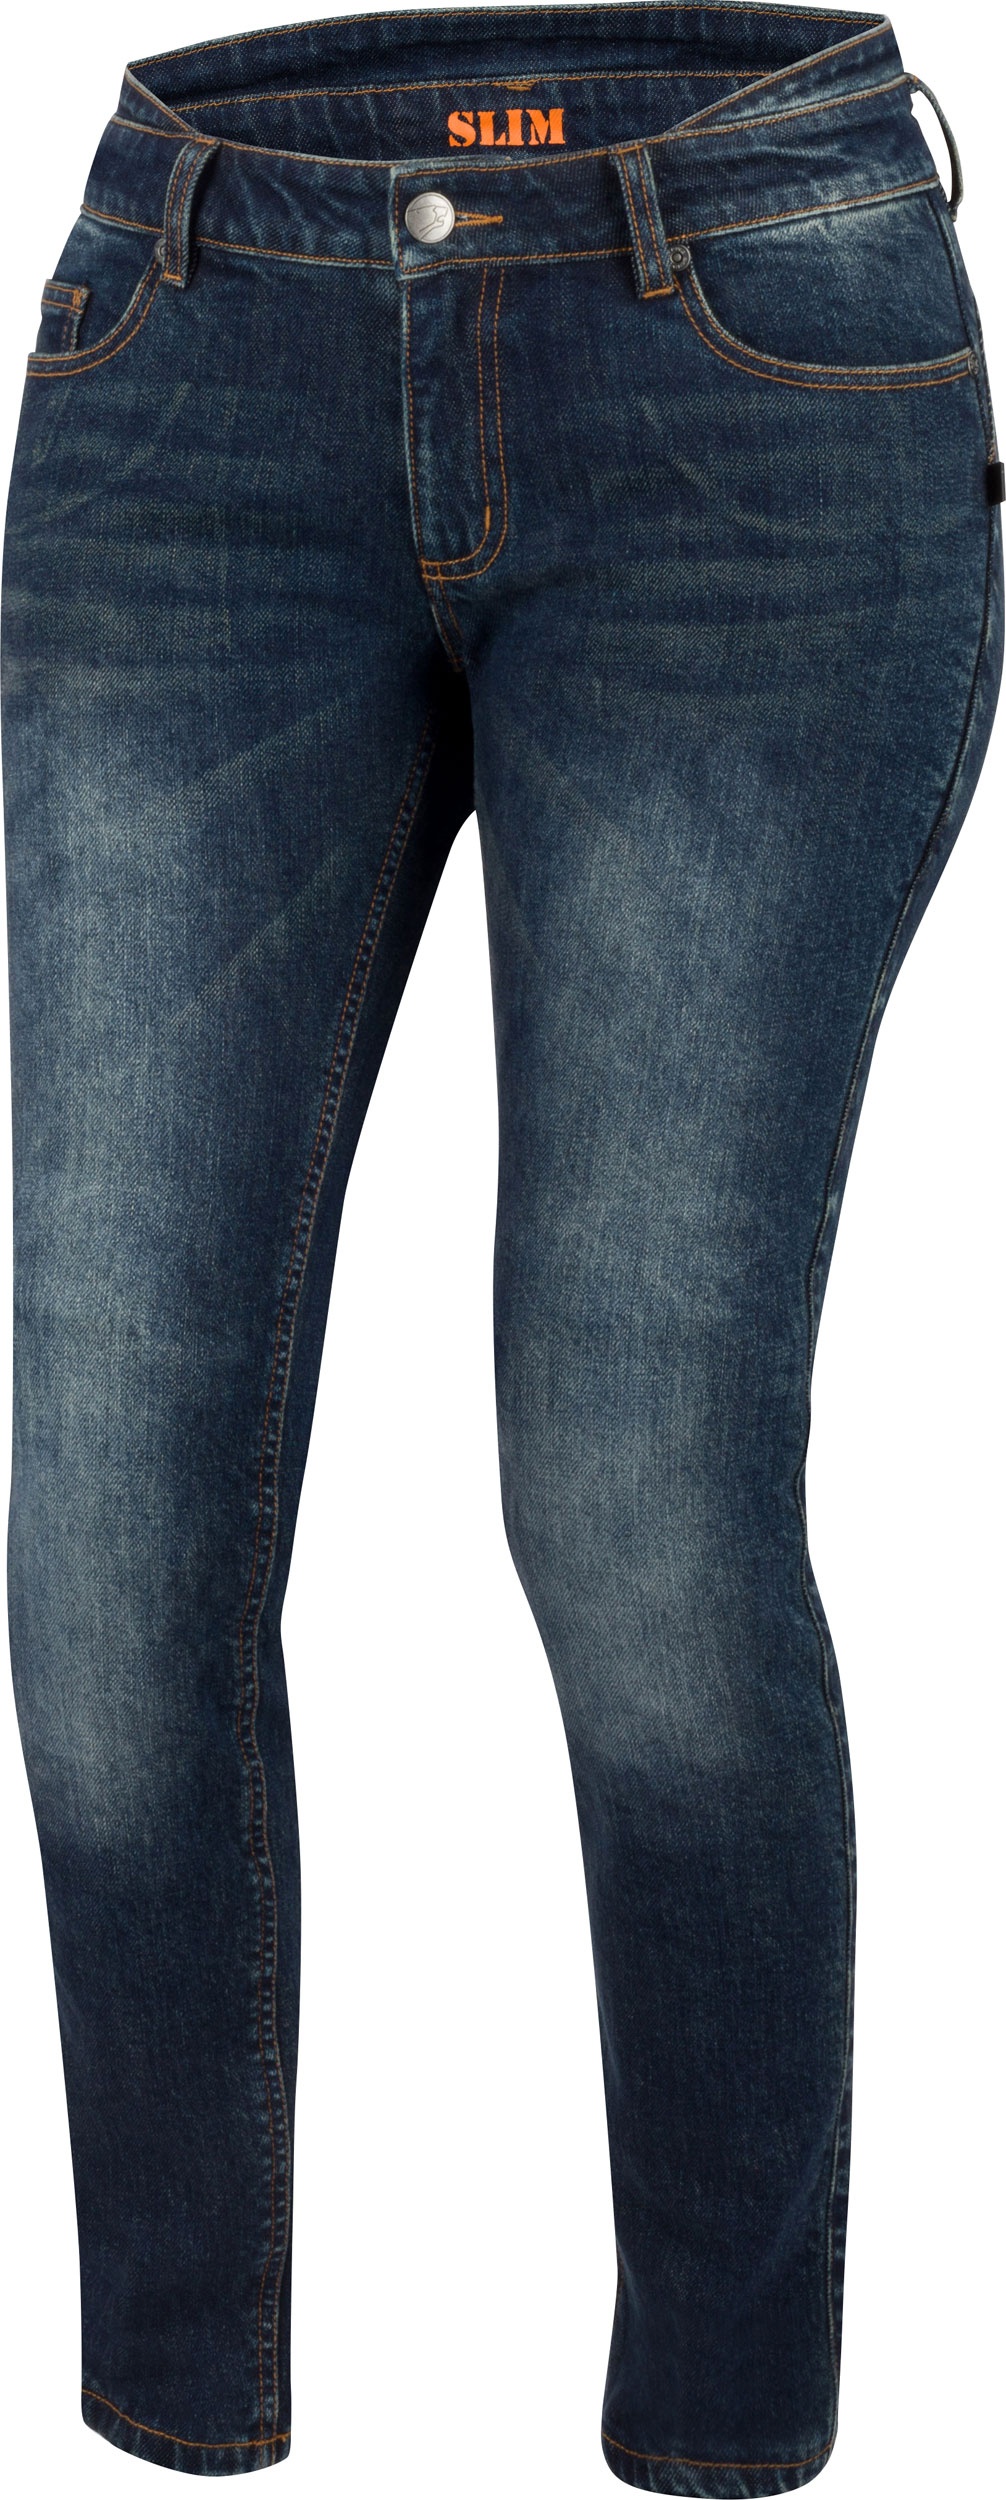 Bering Patricia, jeans femmes - Bleu - T3